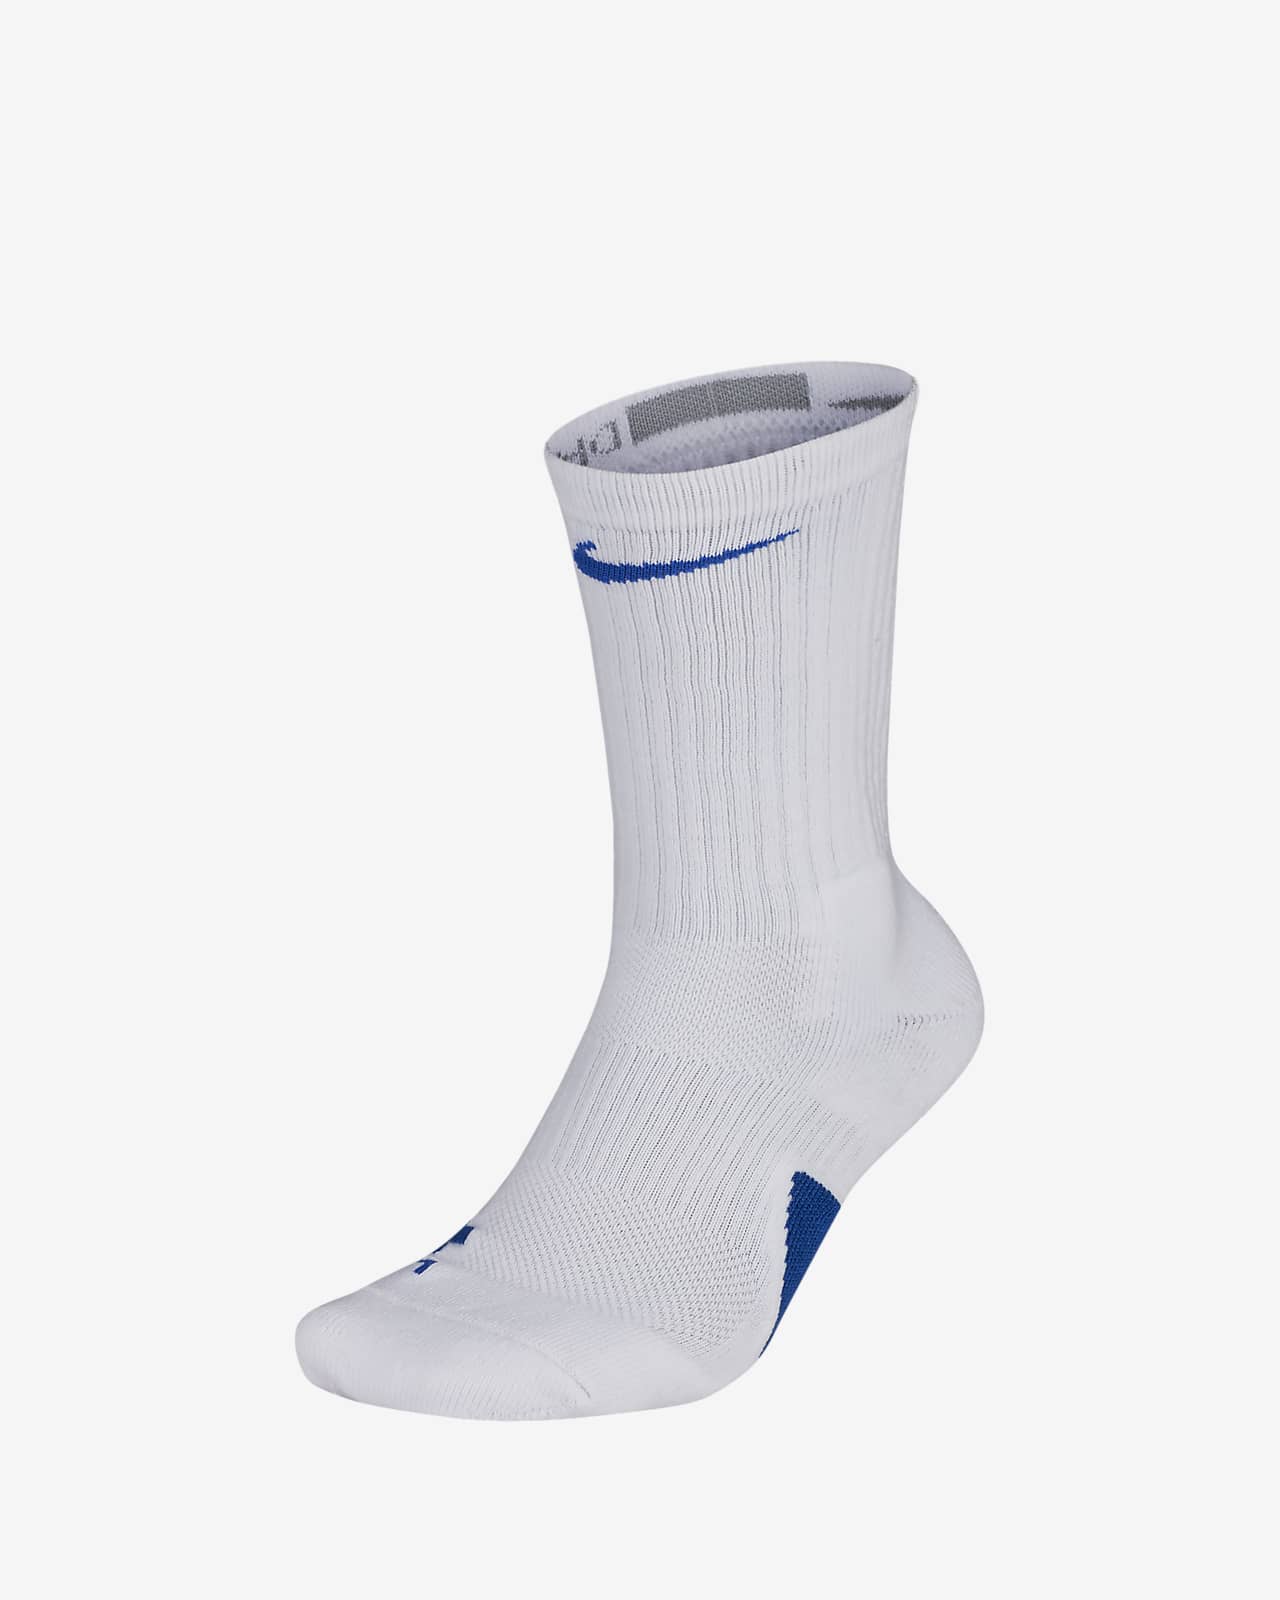 blue and white nike socks - www.hammurabi-gesetze.de